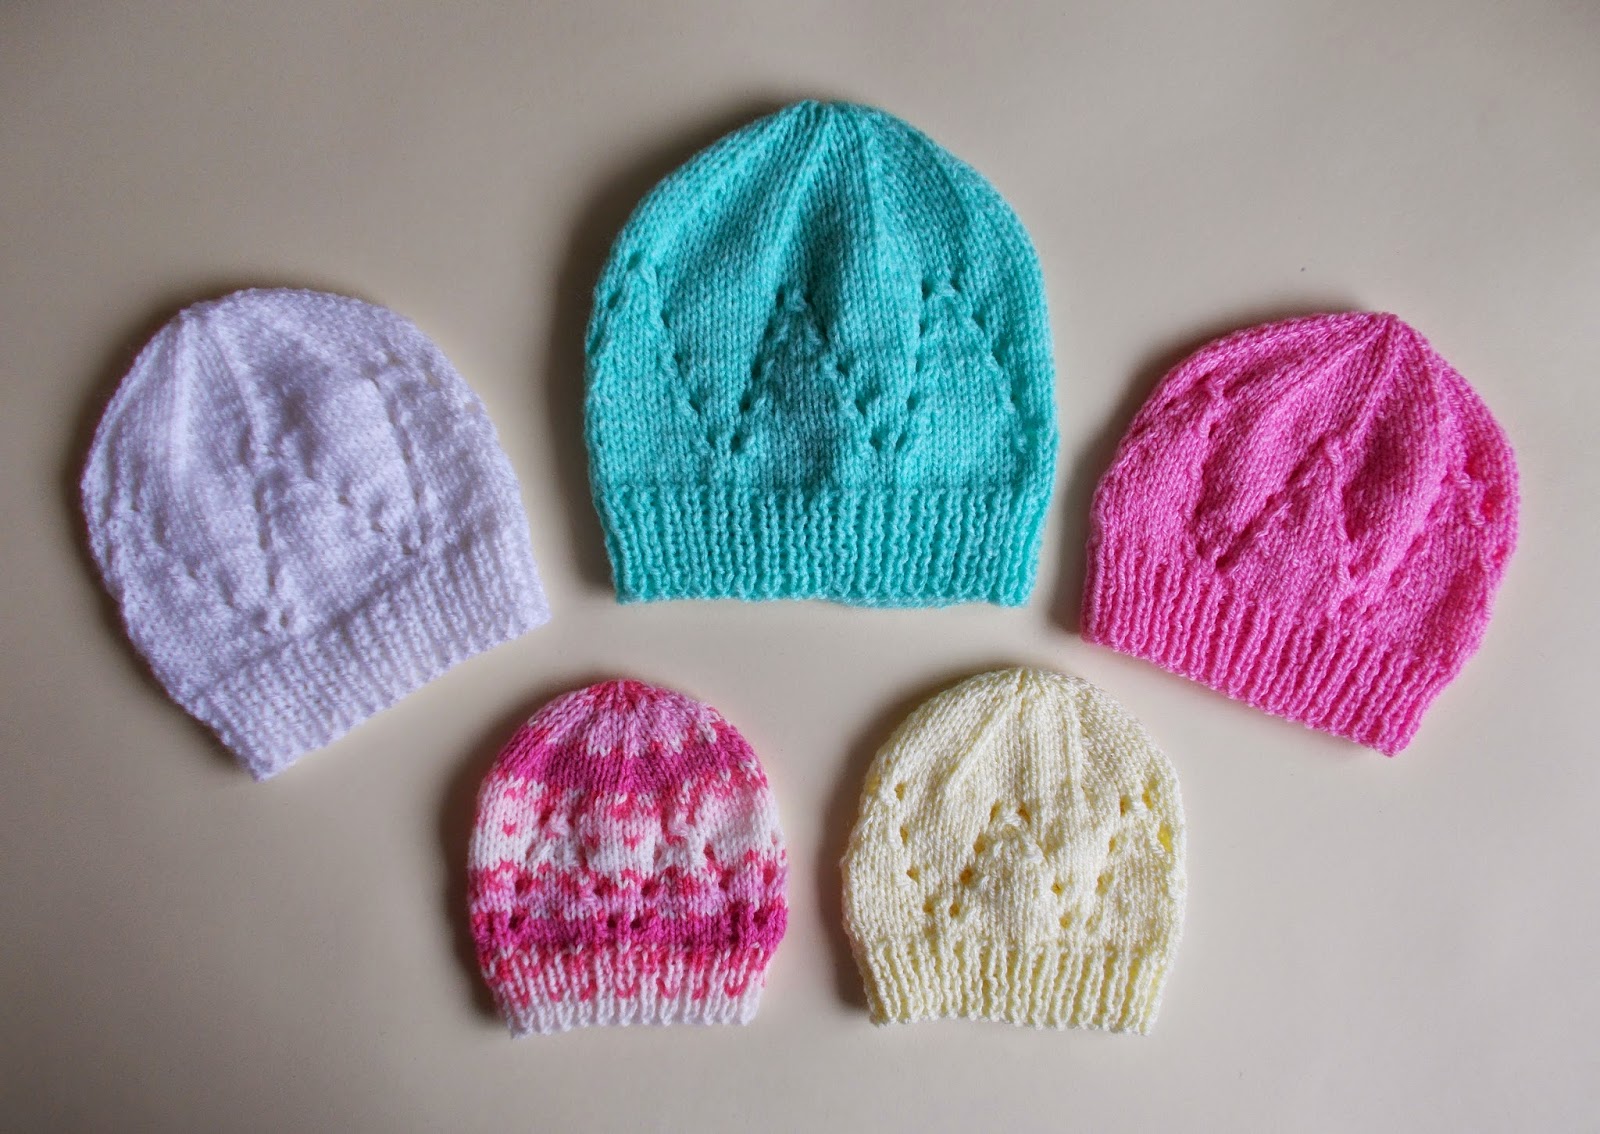 made-by-marianna: My Free Knitting Patterns